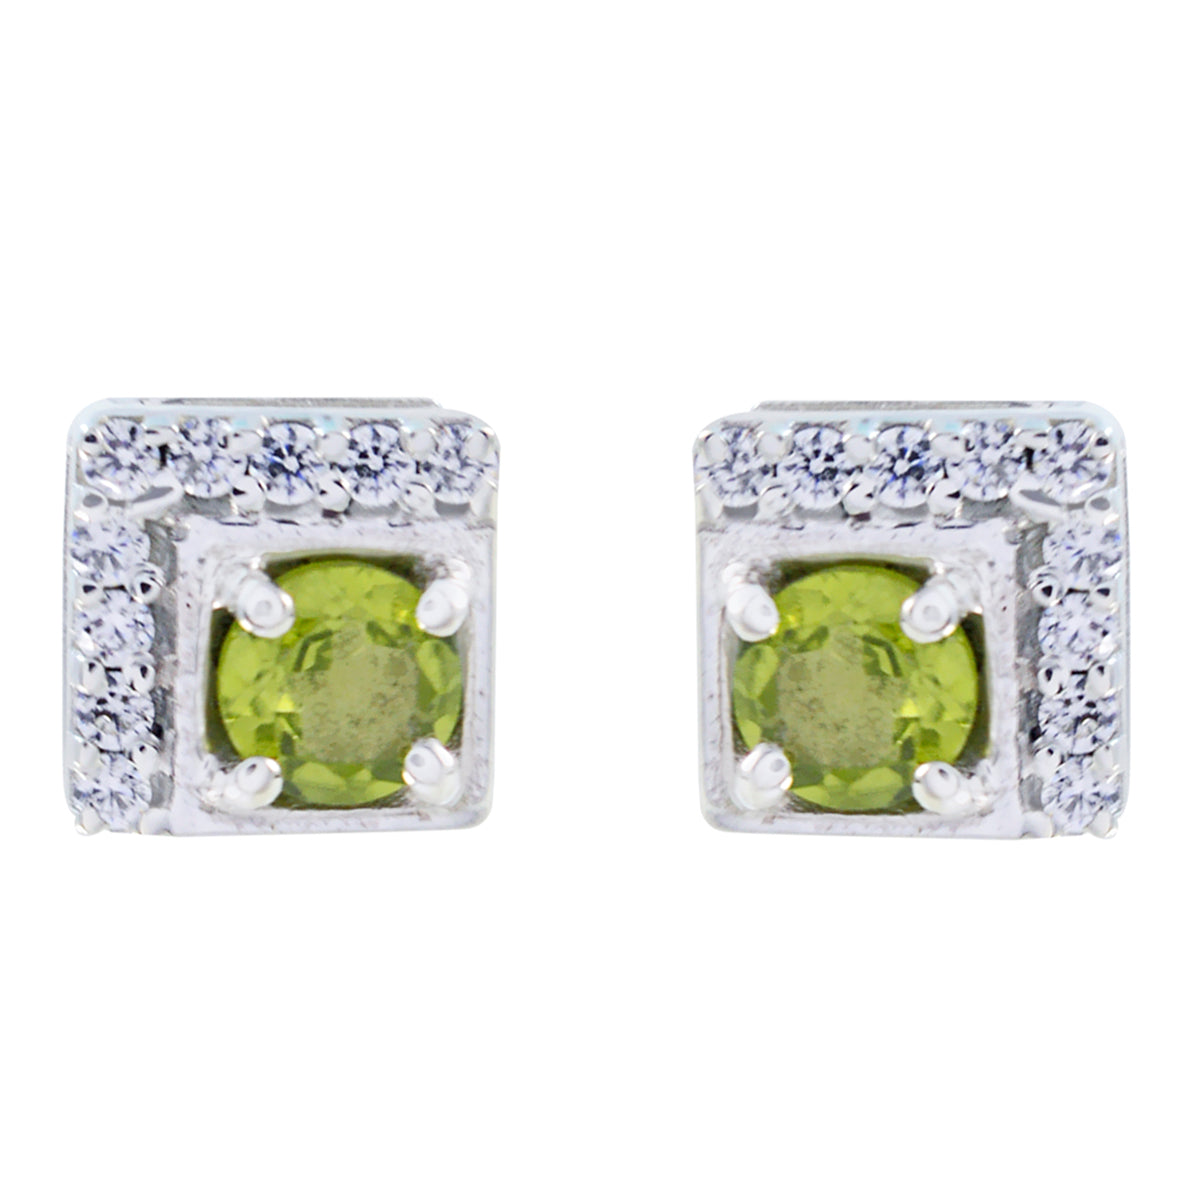 Riyo Natural Gemstone square Faceted Green Peridot Silver Earrings st. patricks day gift